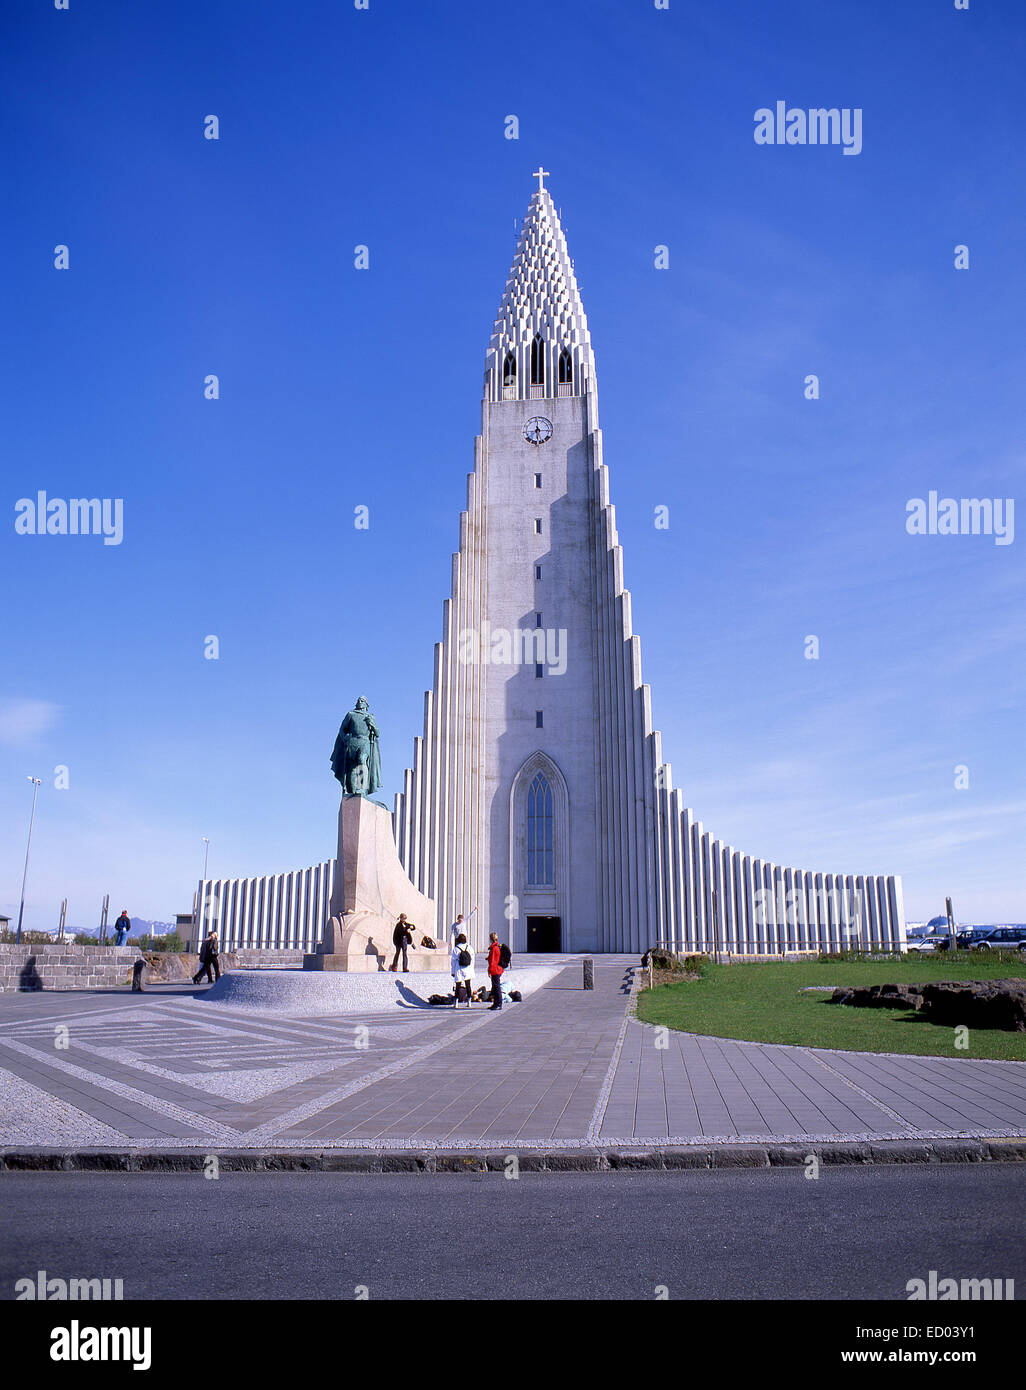 (L'église de Hallgrímskirkja Hallgrímur) montrant la statue, Leif Erikson Skólavörðustígur, Reykjavík, la capitale nationale, de l'Islande Banque D'Images